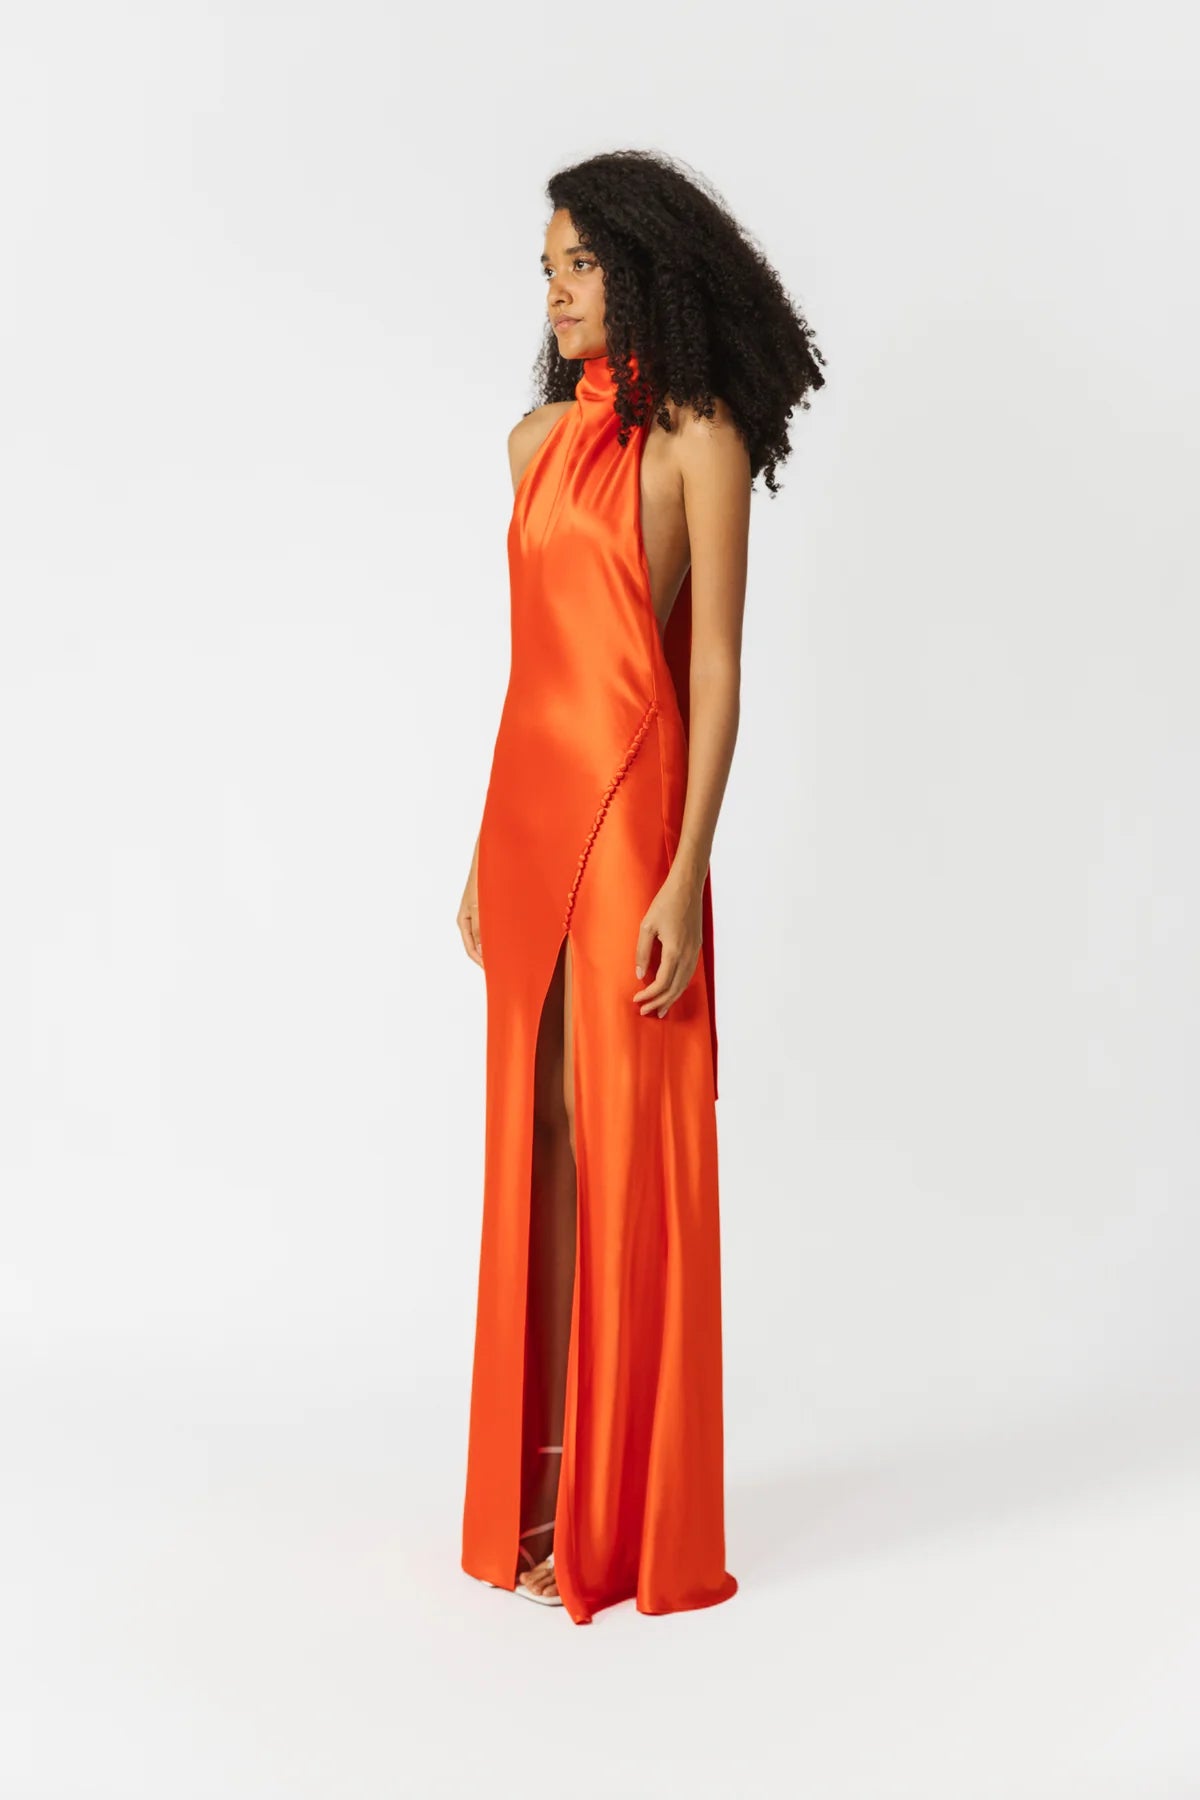 Penelope Backless Satin Gown in Scarlet Orange